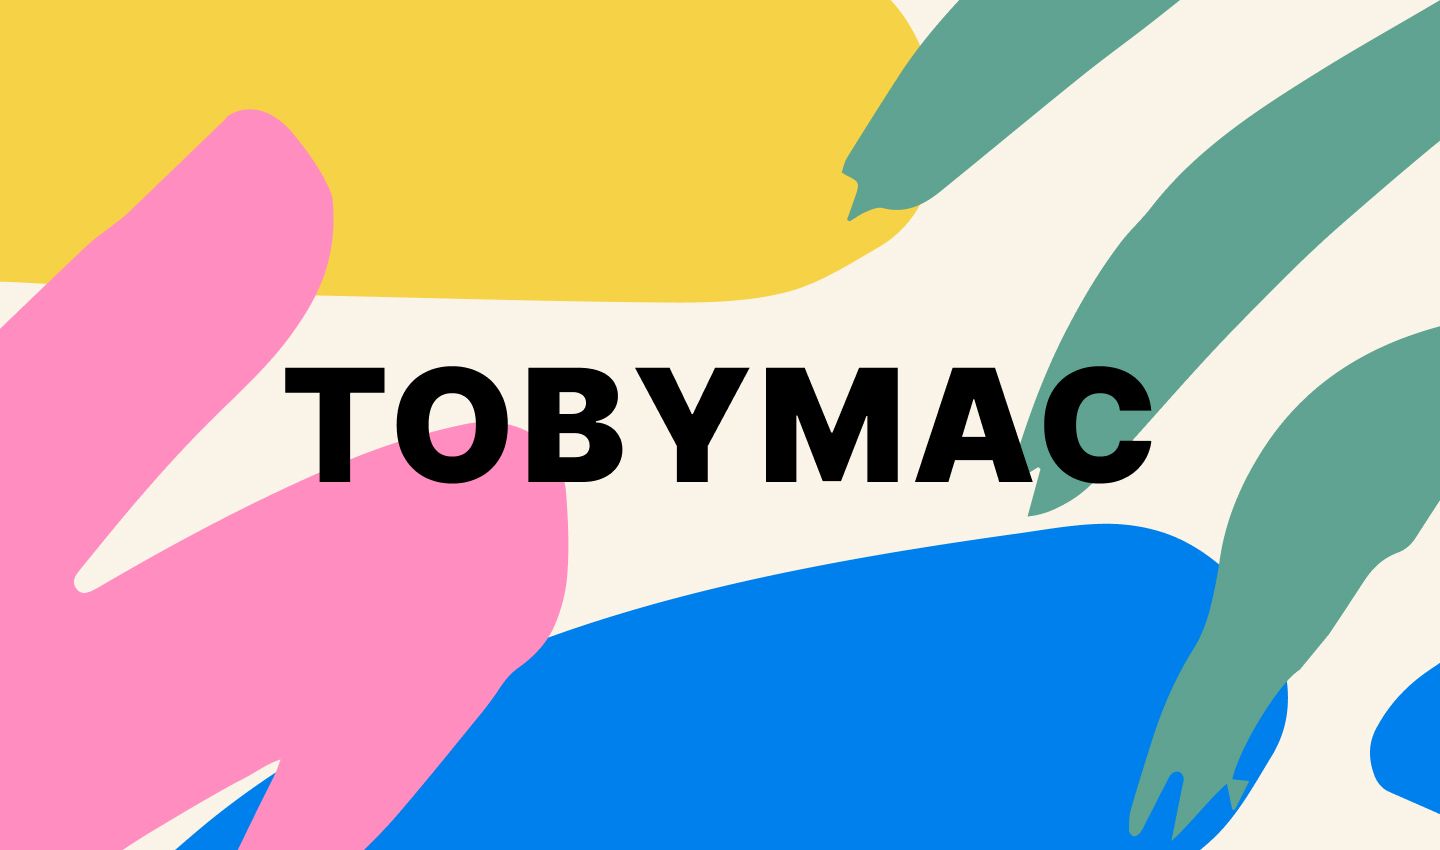 (c) Tobymac.com